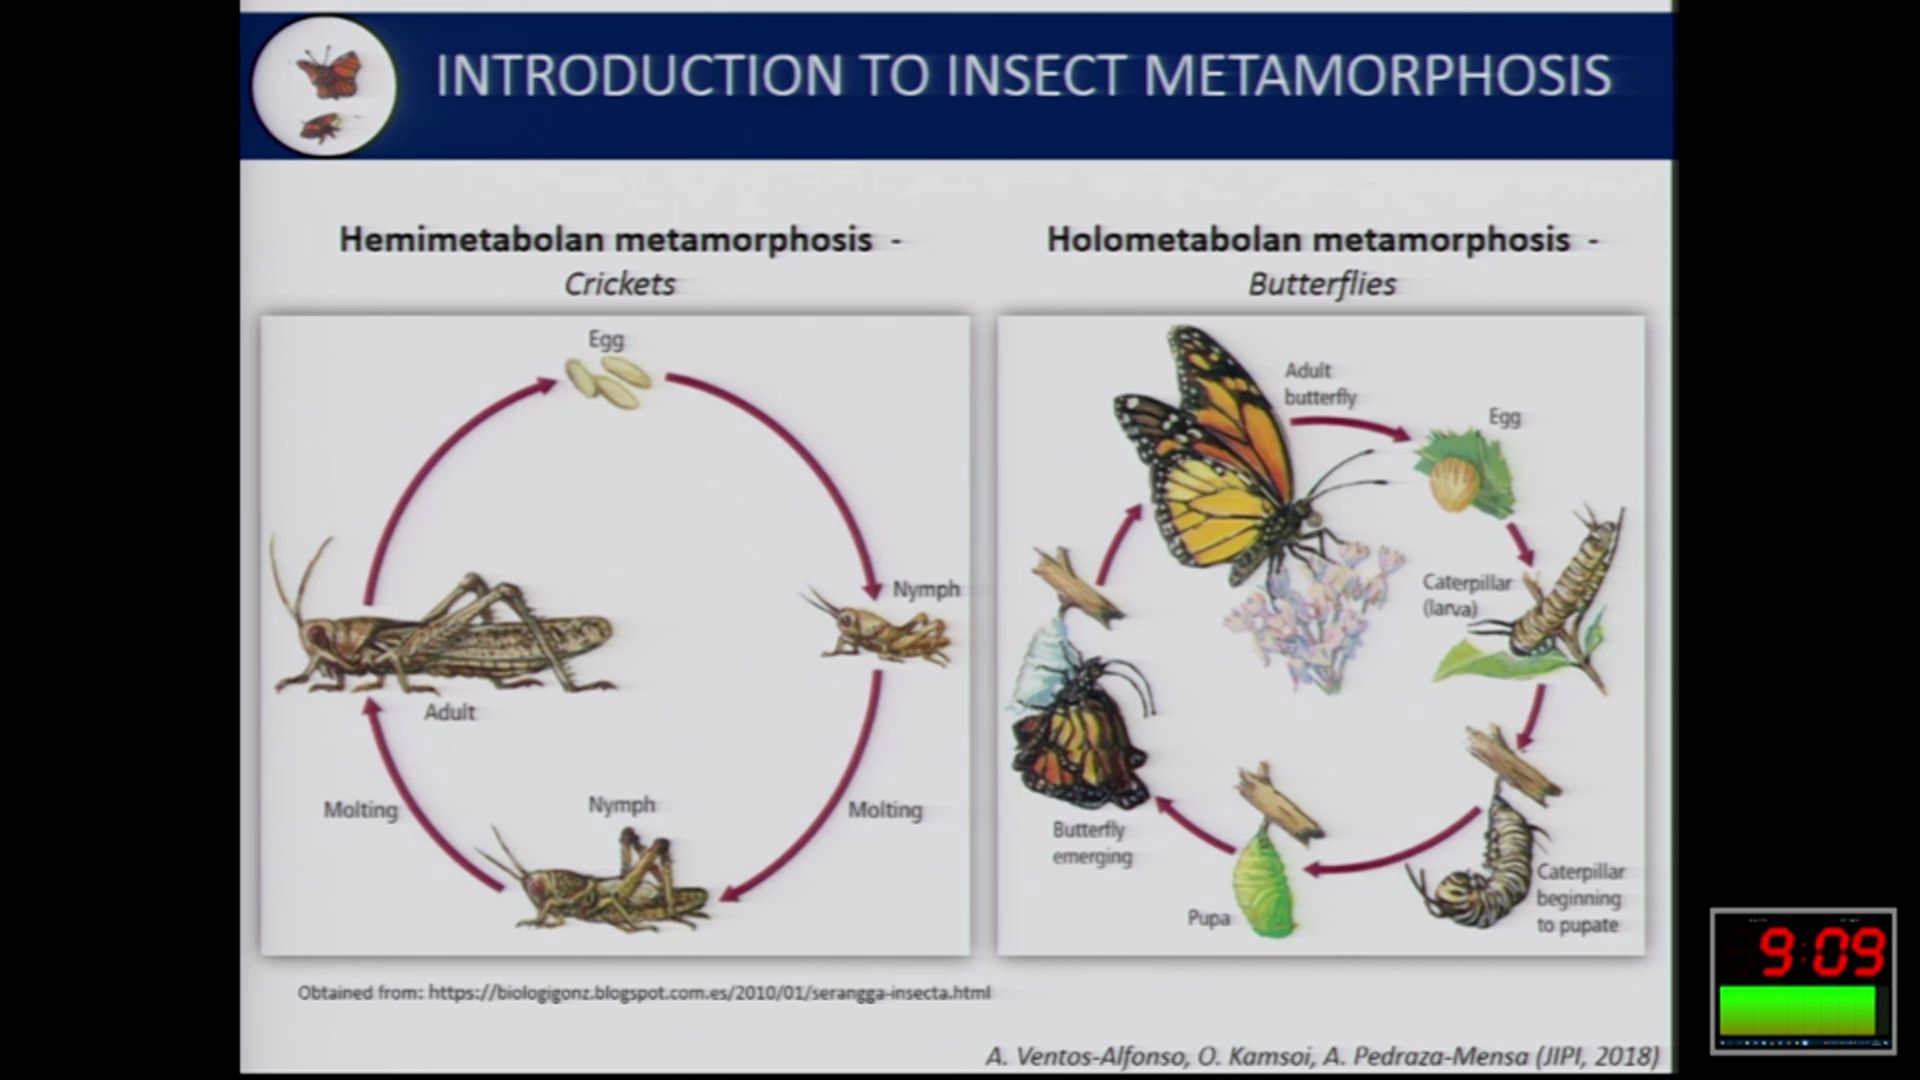 Blatella germanica: life cycle and metamorphosis